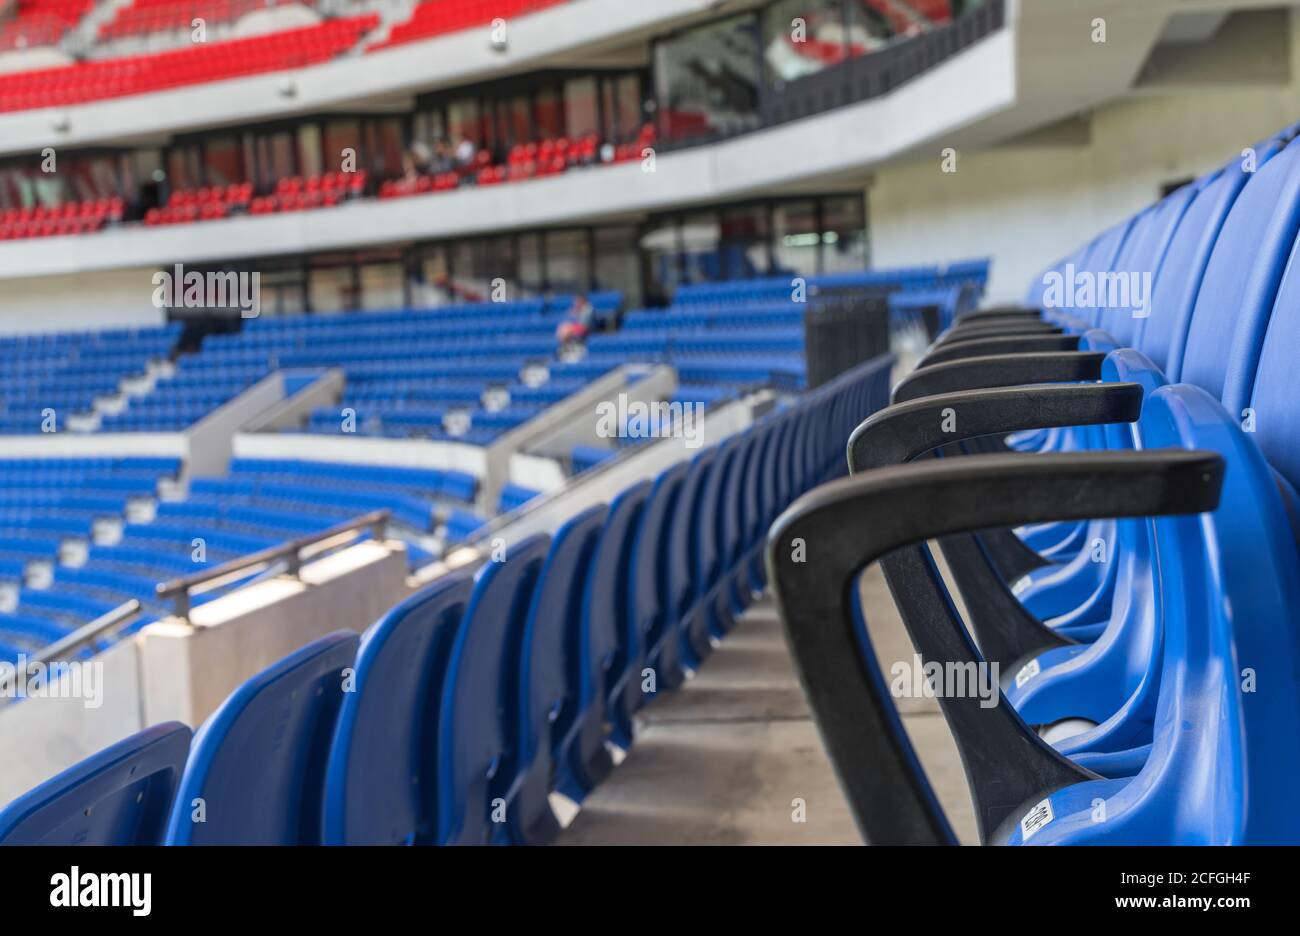 VIP tribune at FC Lyon Olympique stadium Stock Photo